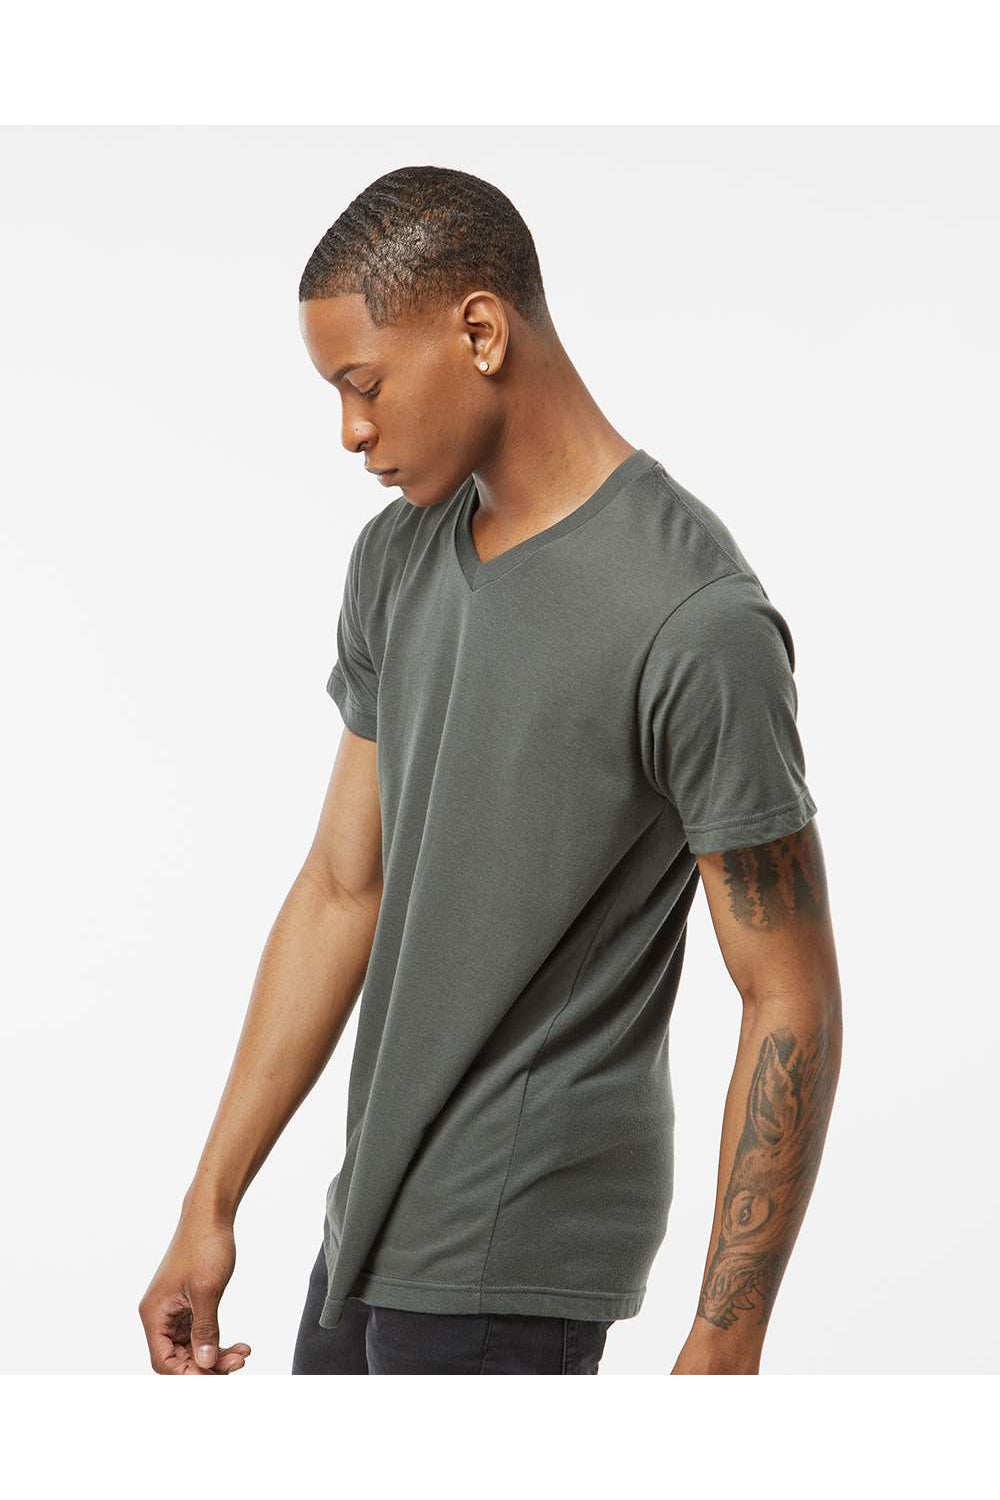 Tultex 207 Mens Poly-Rich Short Sleeve V-Neck T-Shirt Charcoal Grey Model Side